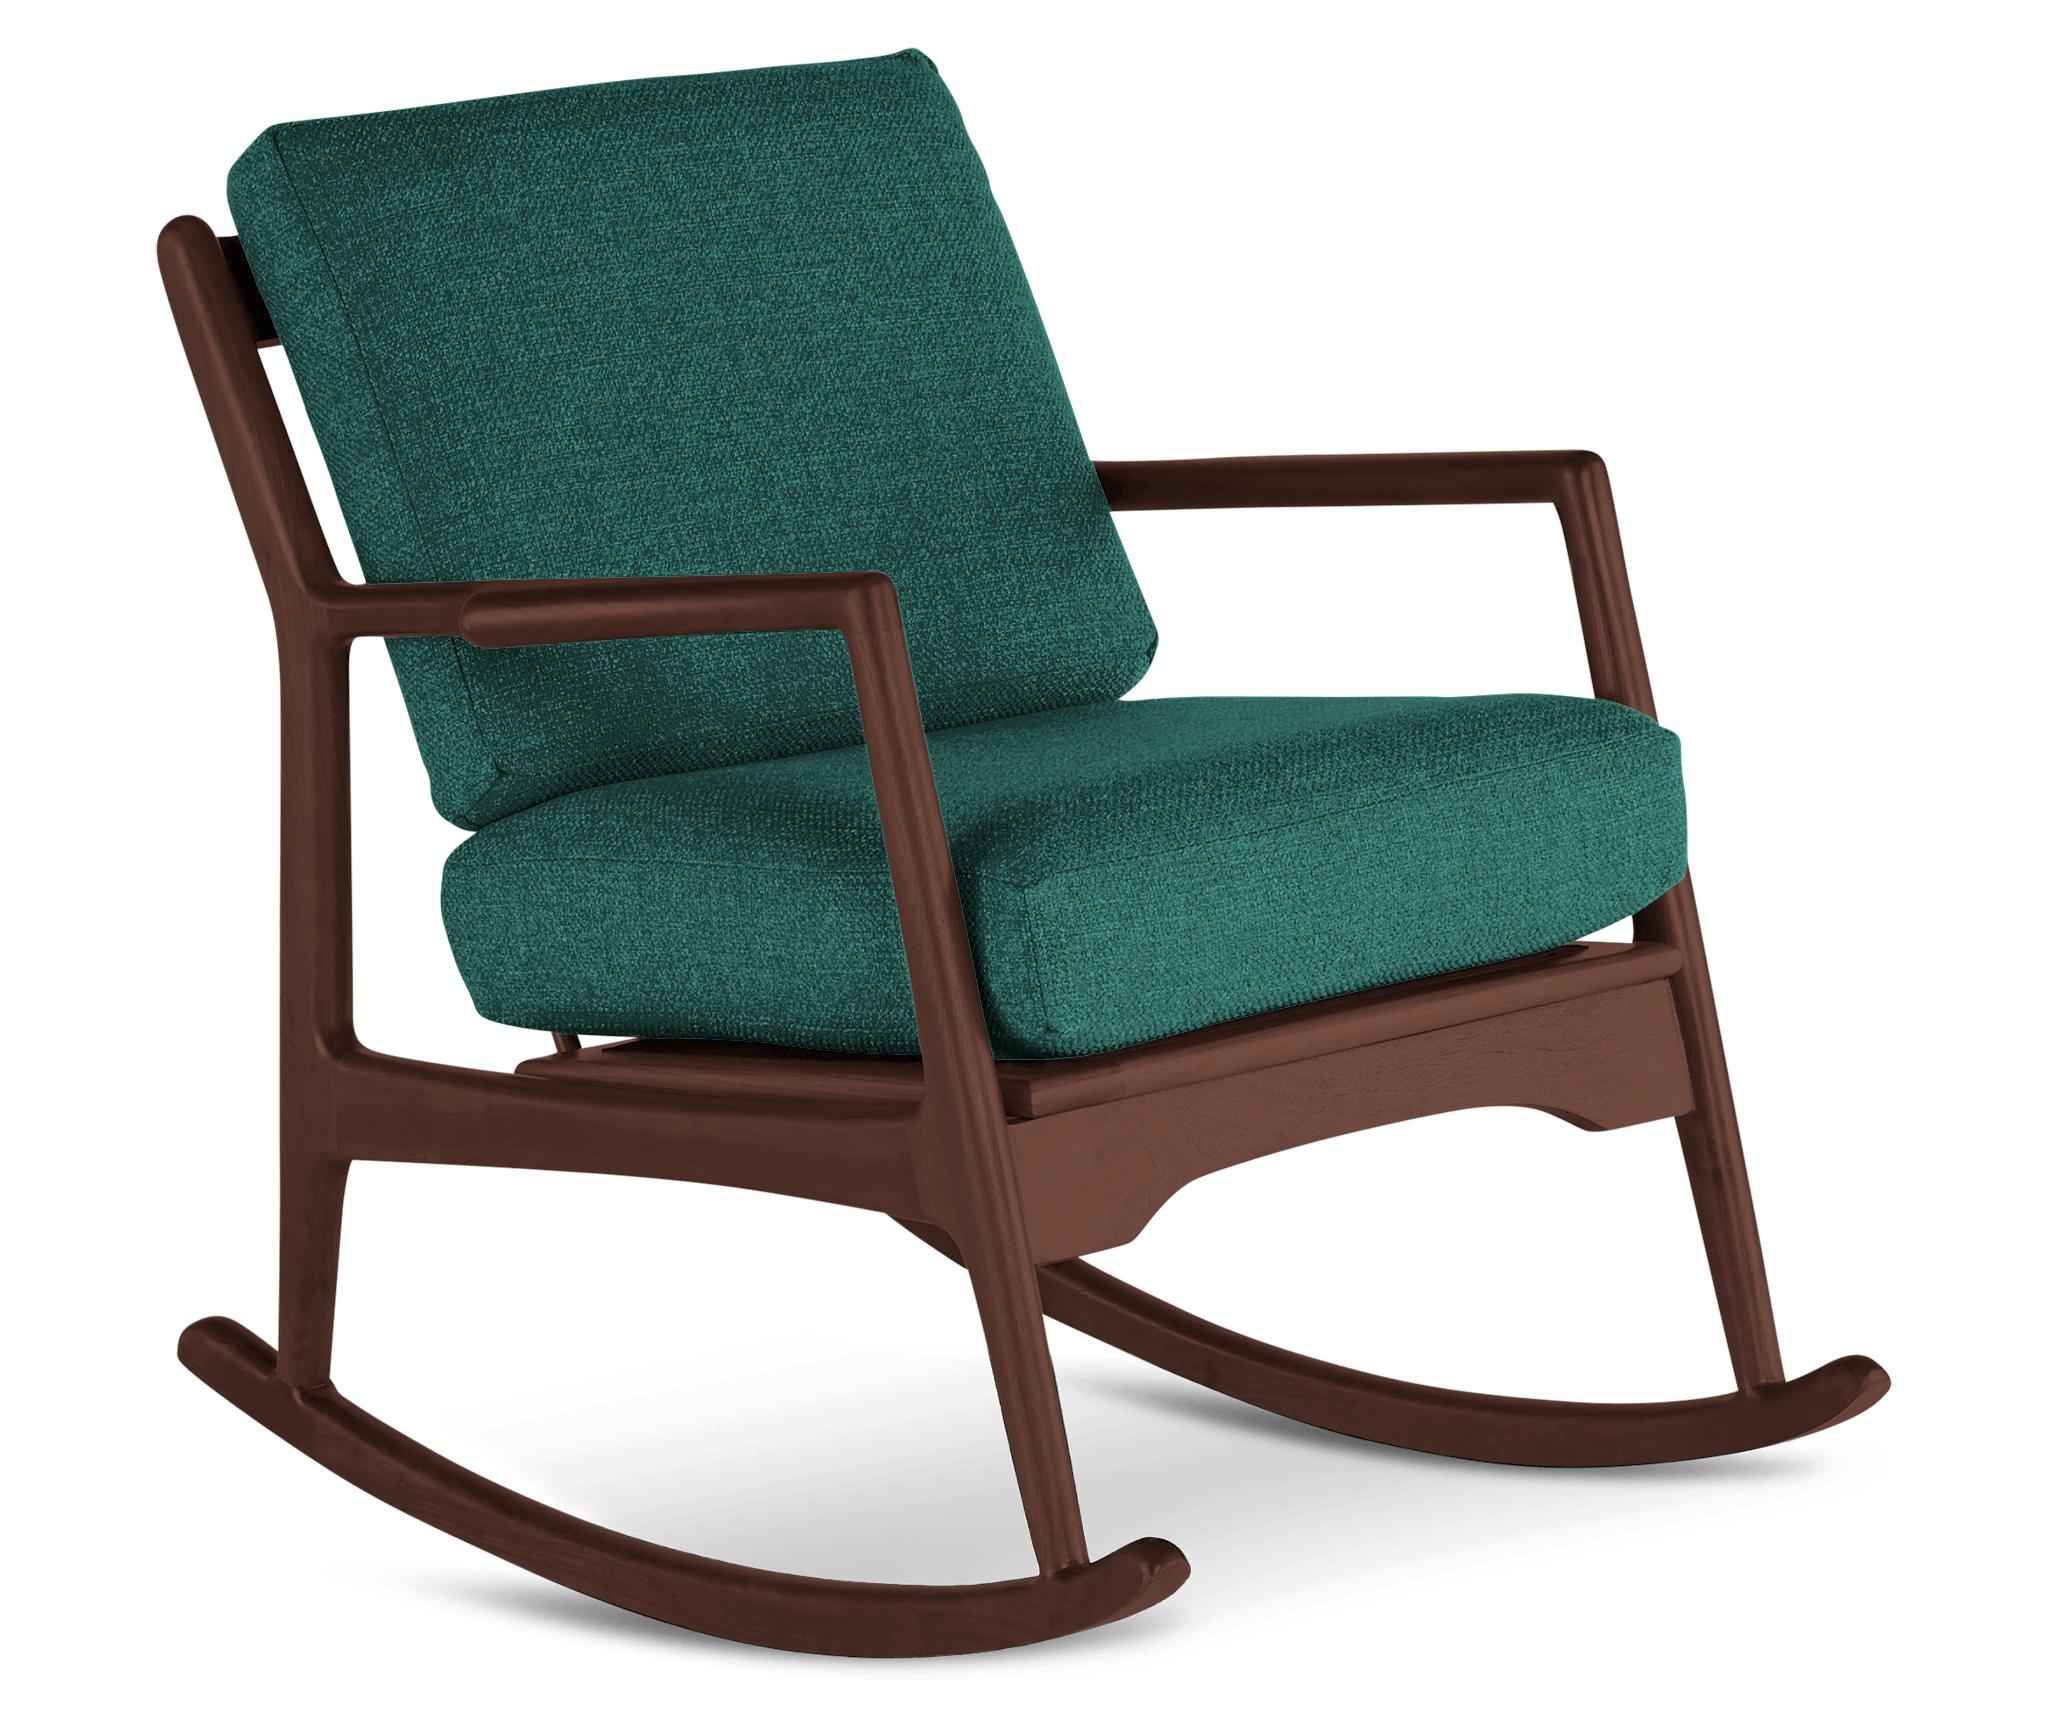 Blue Collins Mid Century Modern Rocking Chair - Prime Peacock - Walnut - Image 1